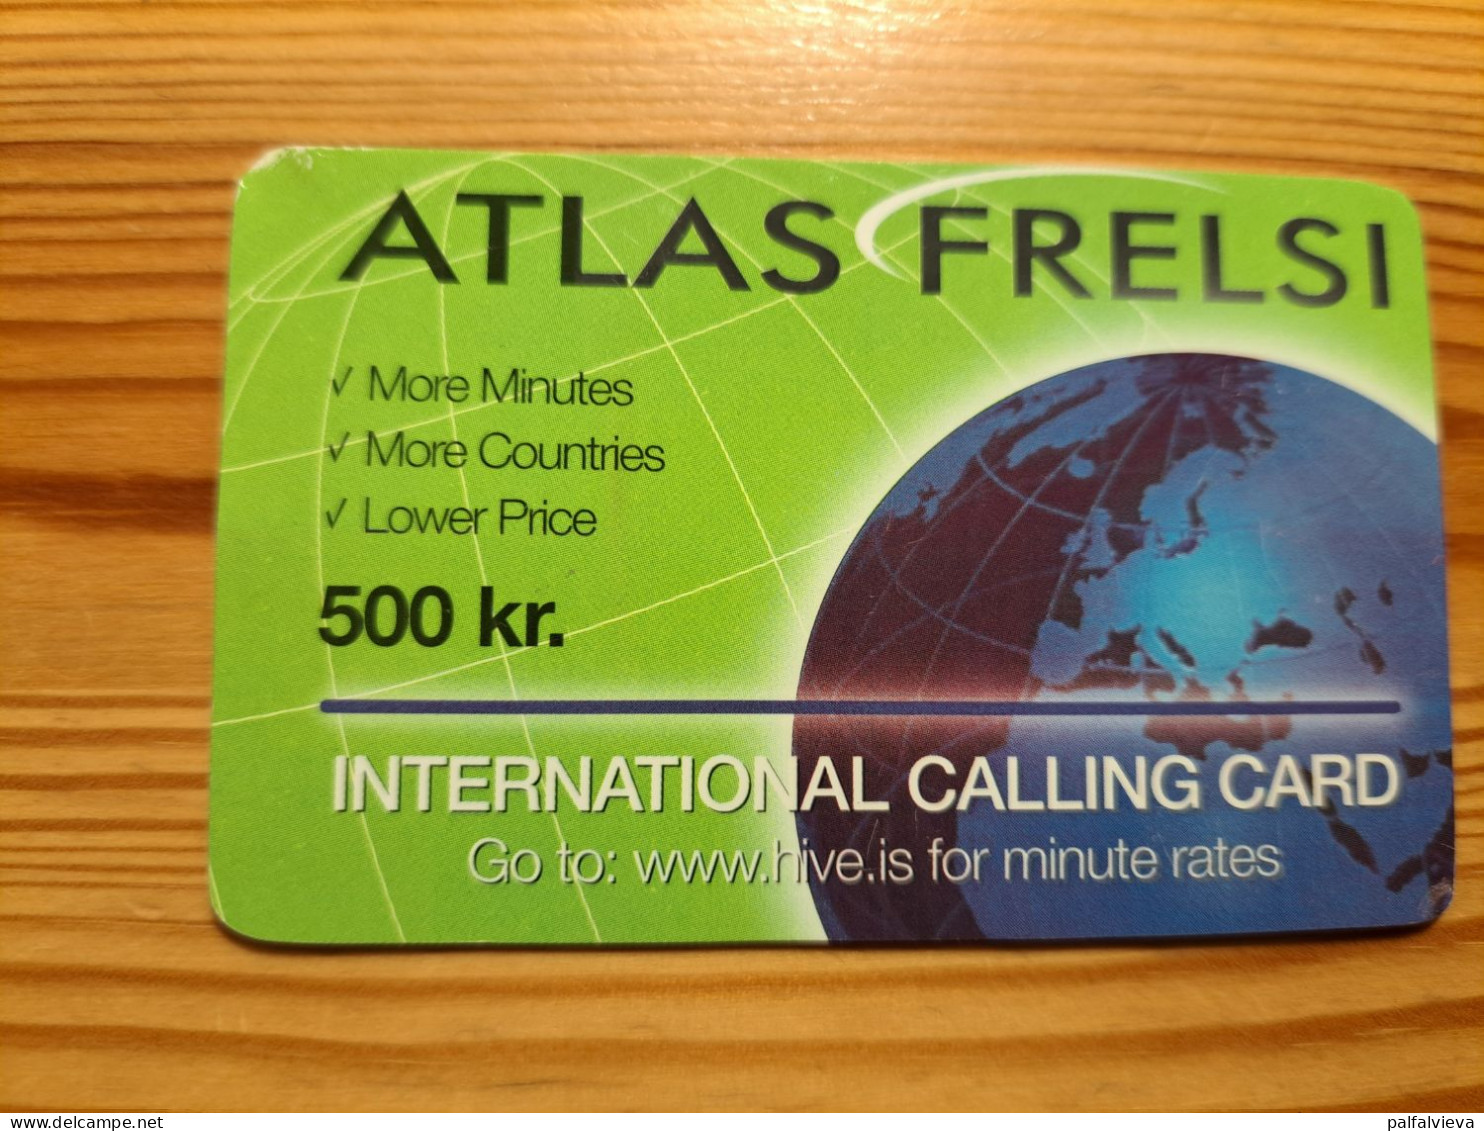 Prepaid Phonecard Iceland, Hive - Atlas Frelsi - Island